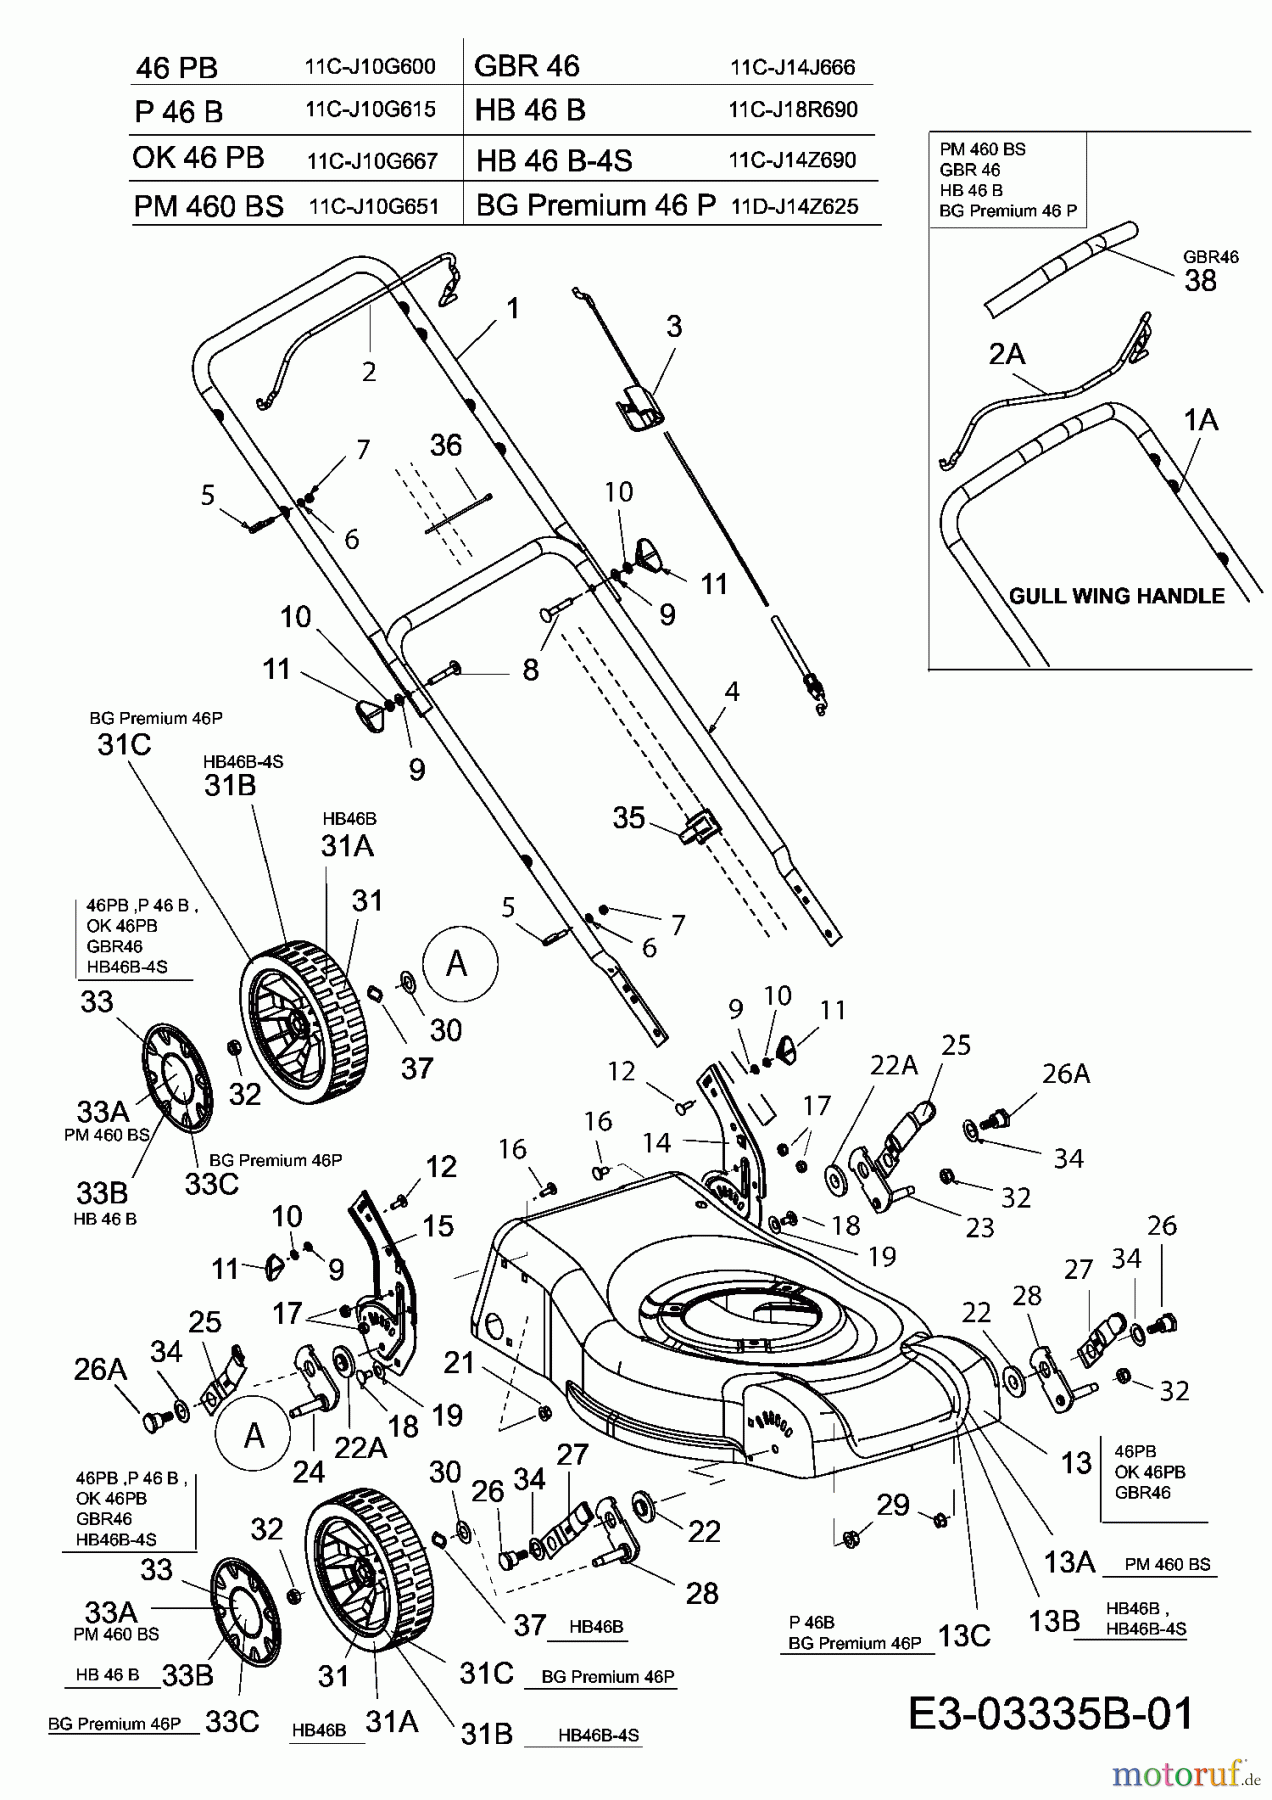  Gutbrod Petrol mower HB 46 B-4 S 11C-J14Z690  (2008) Handle, Wheels, Cutting hight adjustment